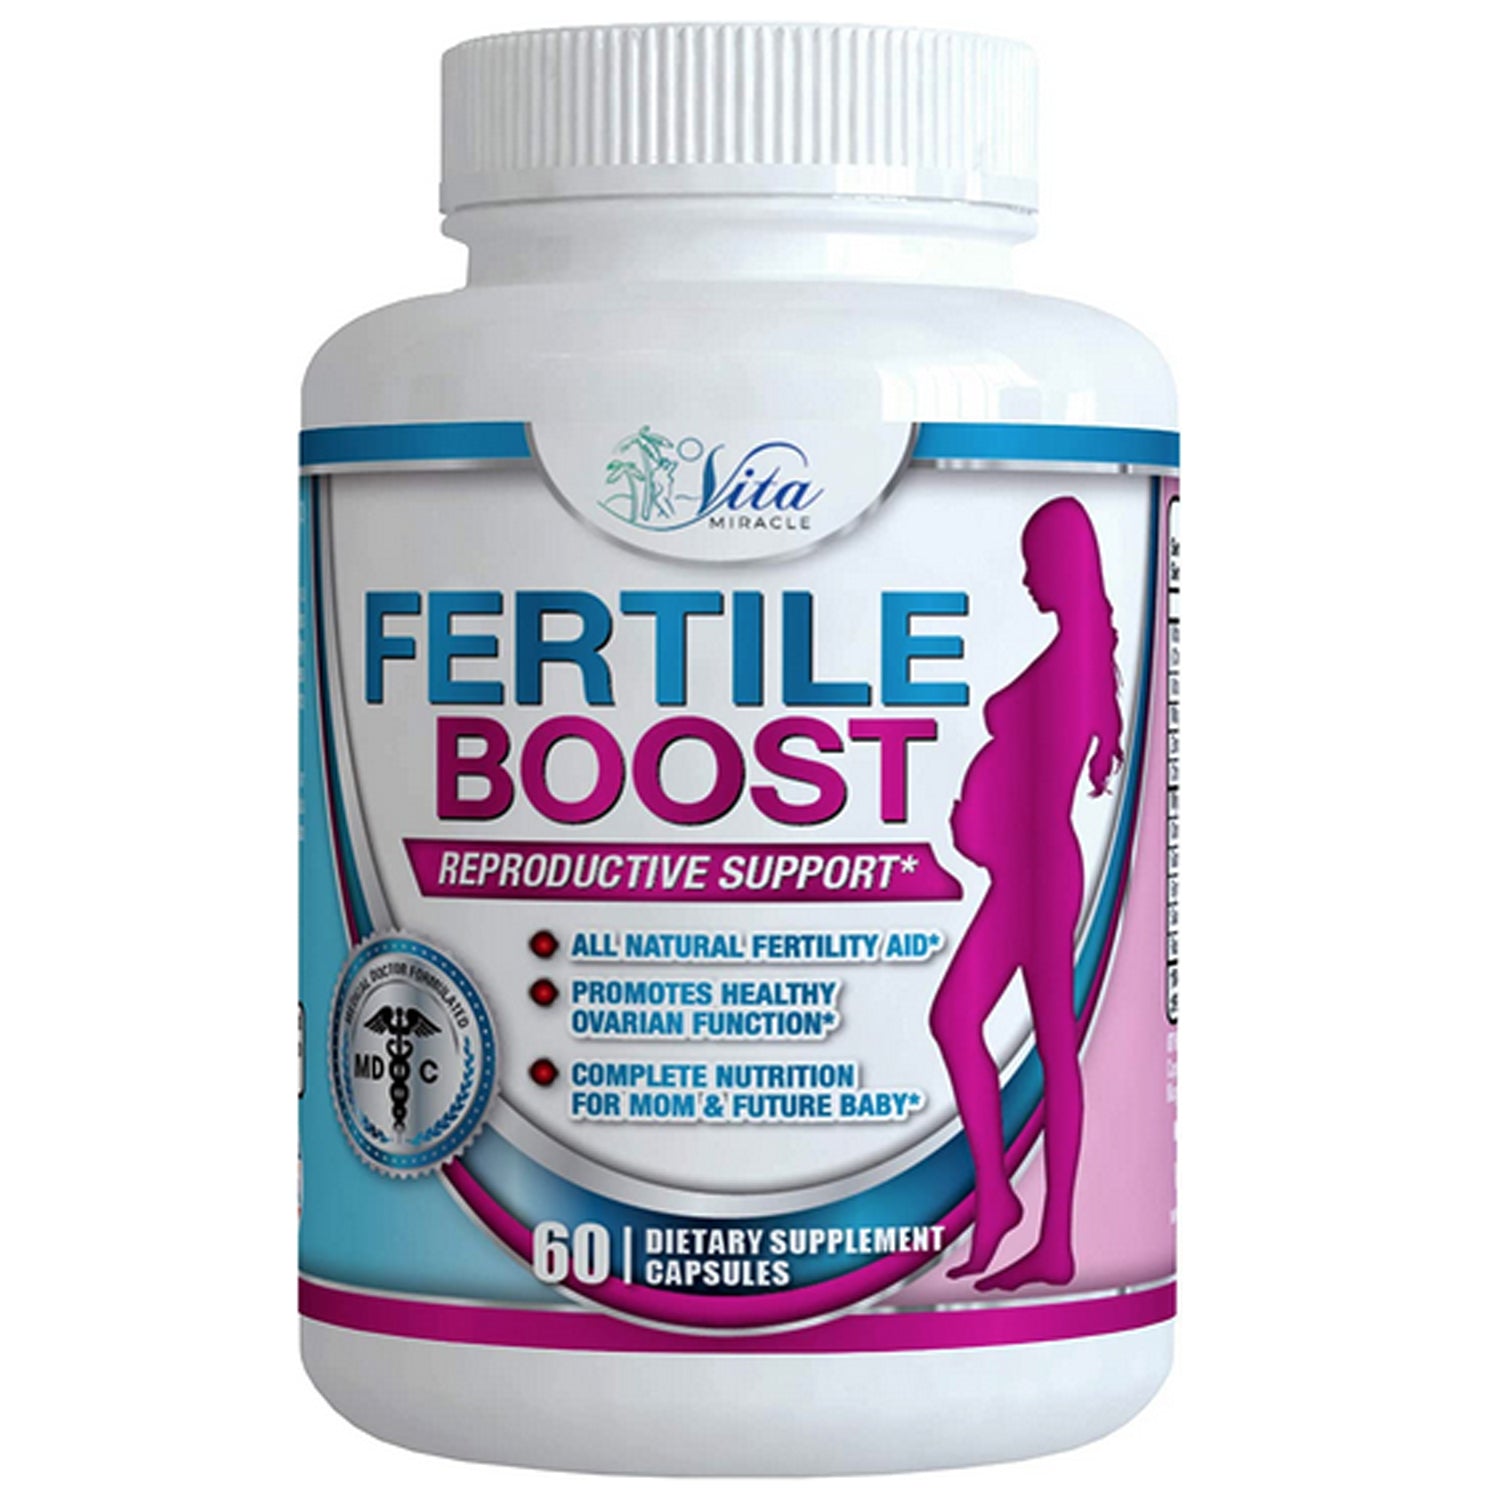 Inositol Capsules Myo-Inositol Fertility Supplements for Women